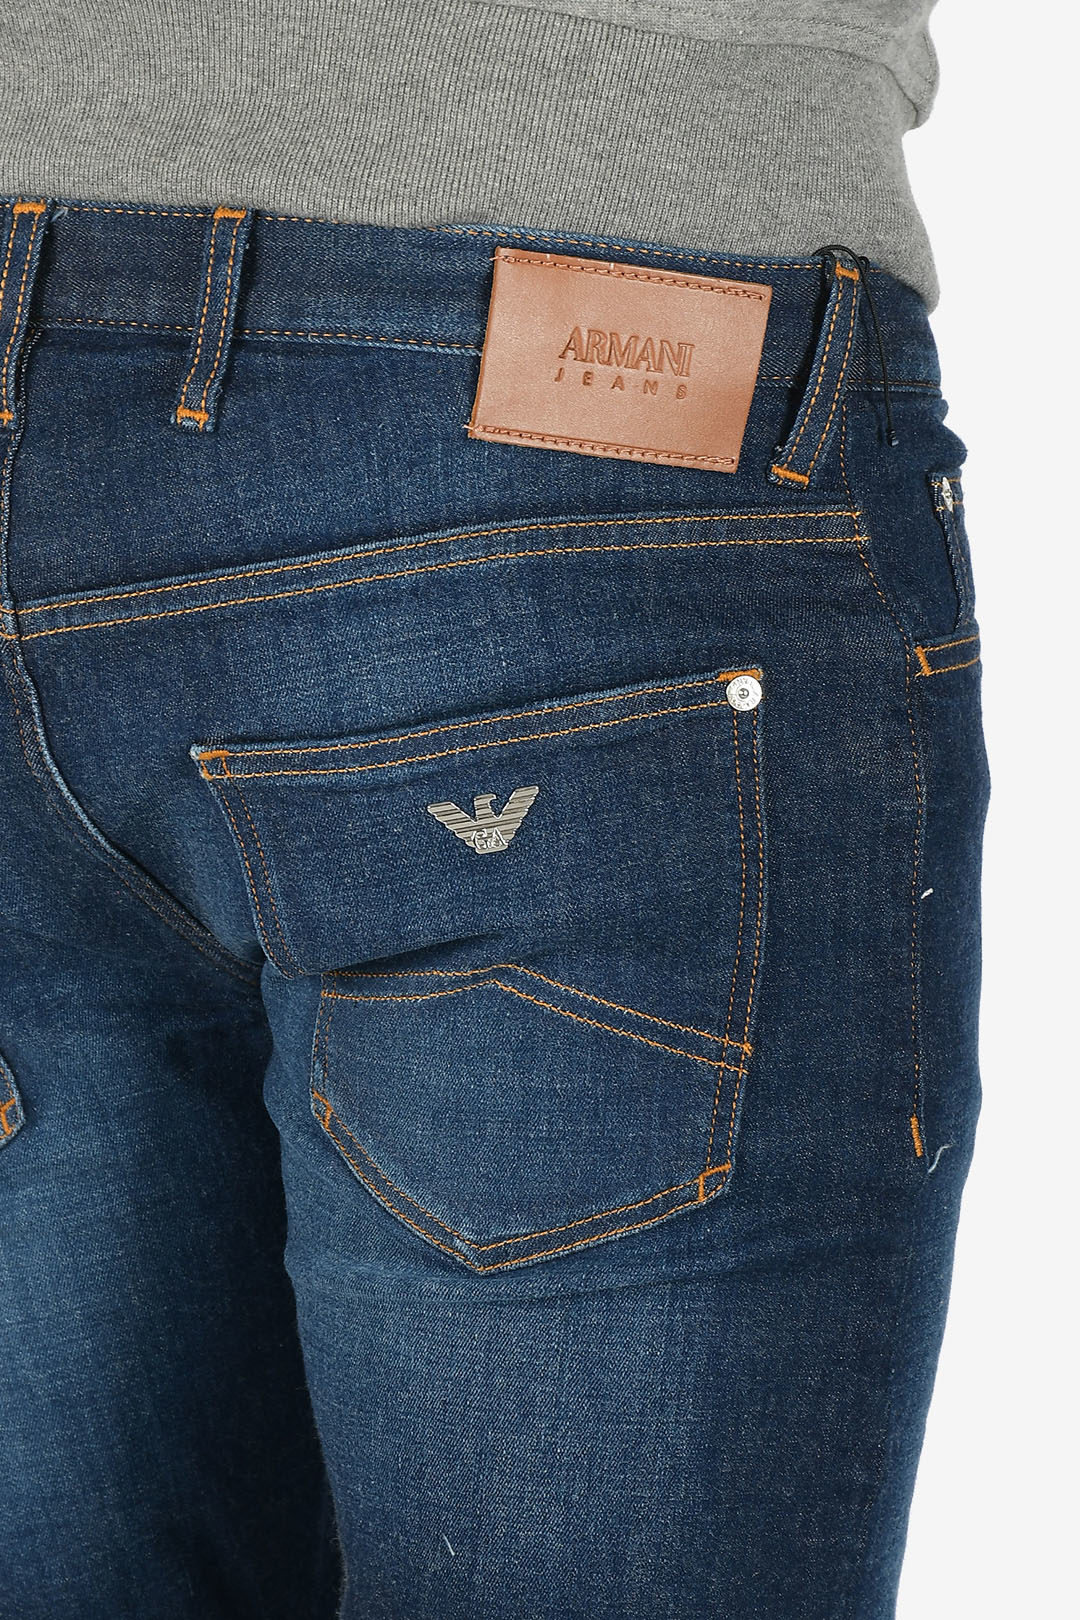 richting Installeren zonne Armani Jeans Extra Slim Fit Deals, SAVE 34% - mpgc.net